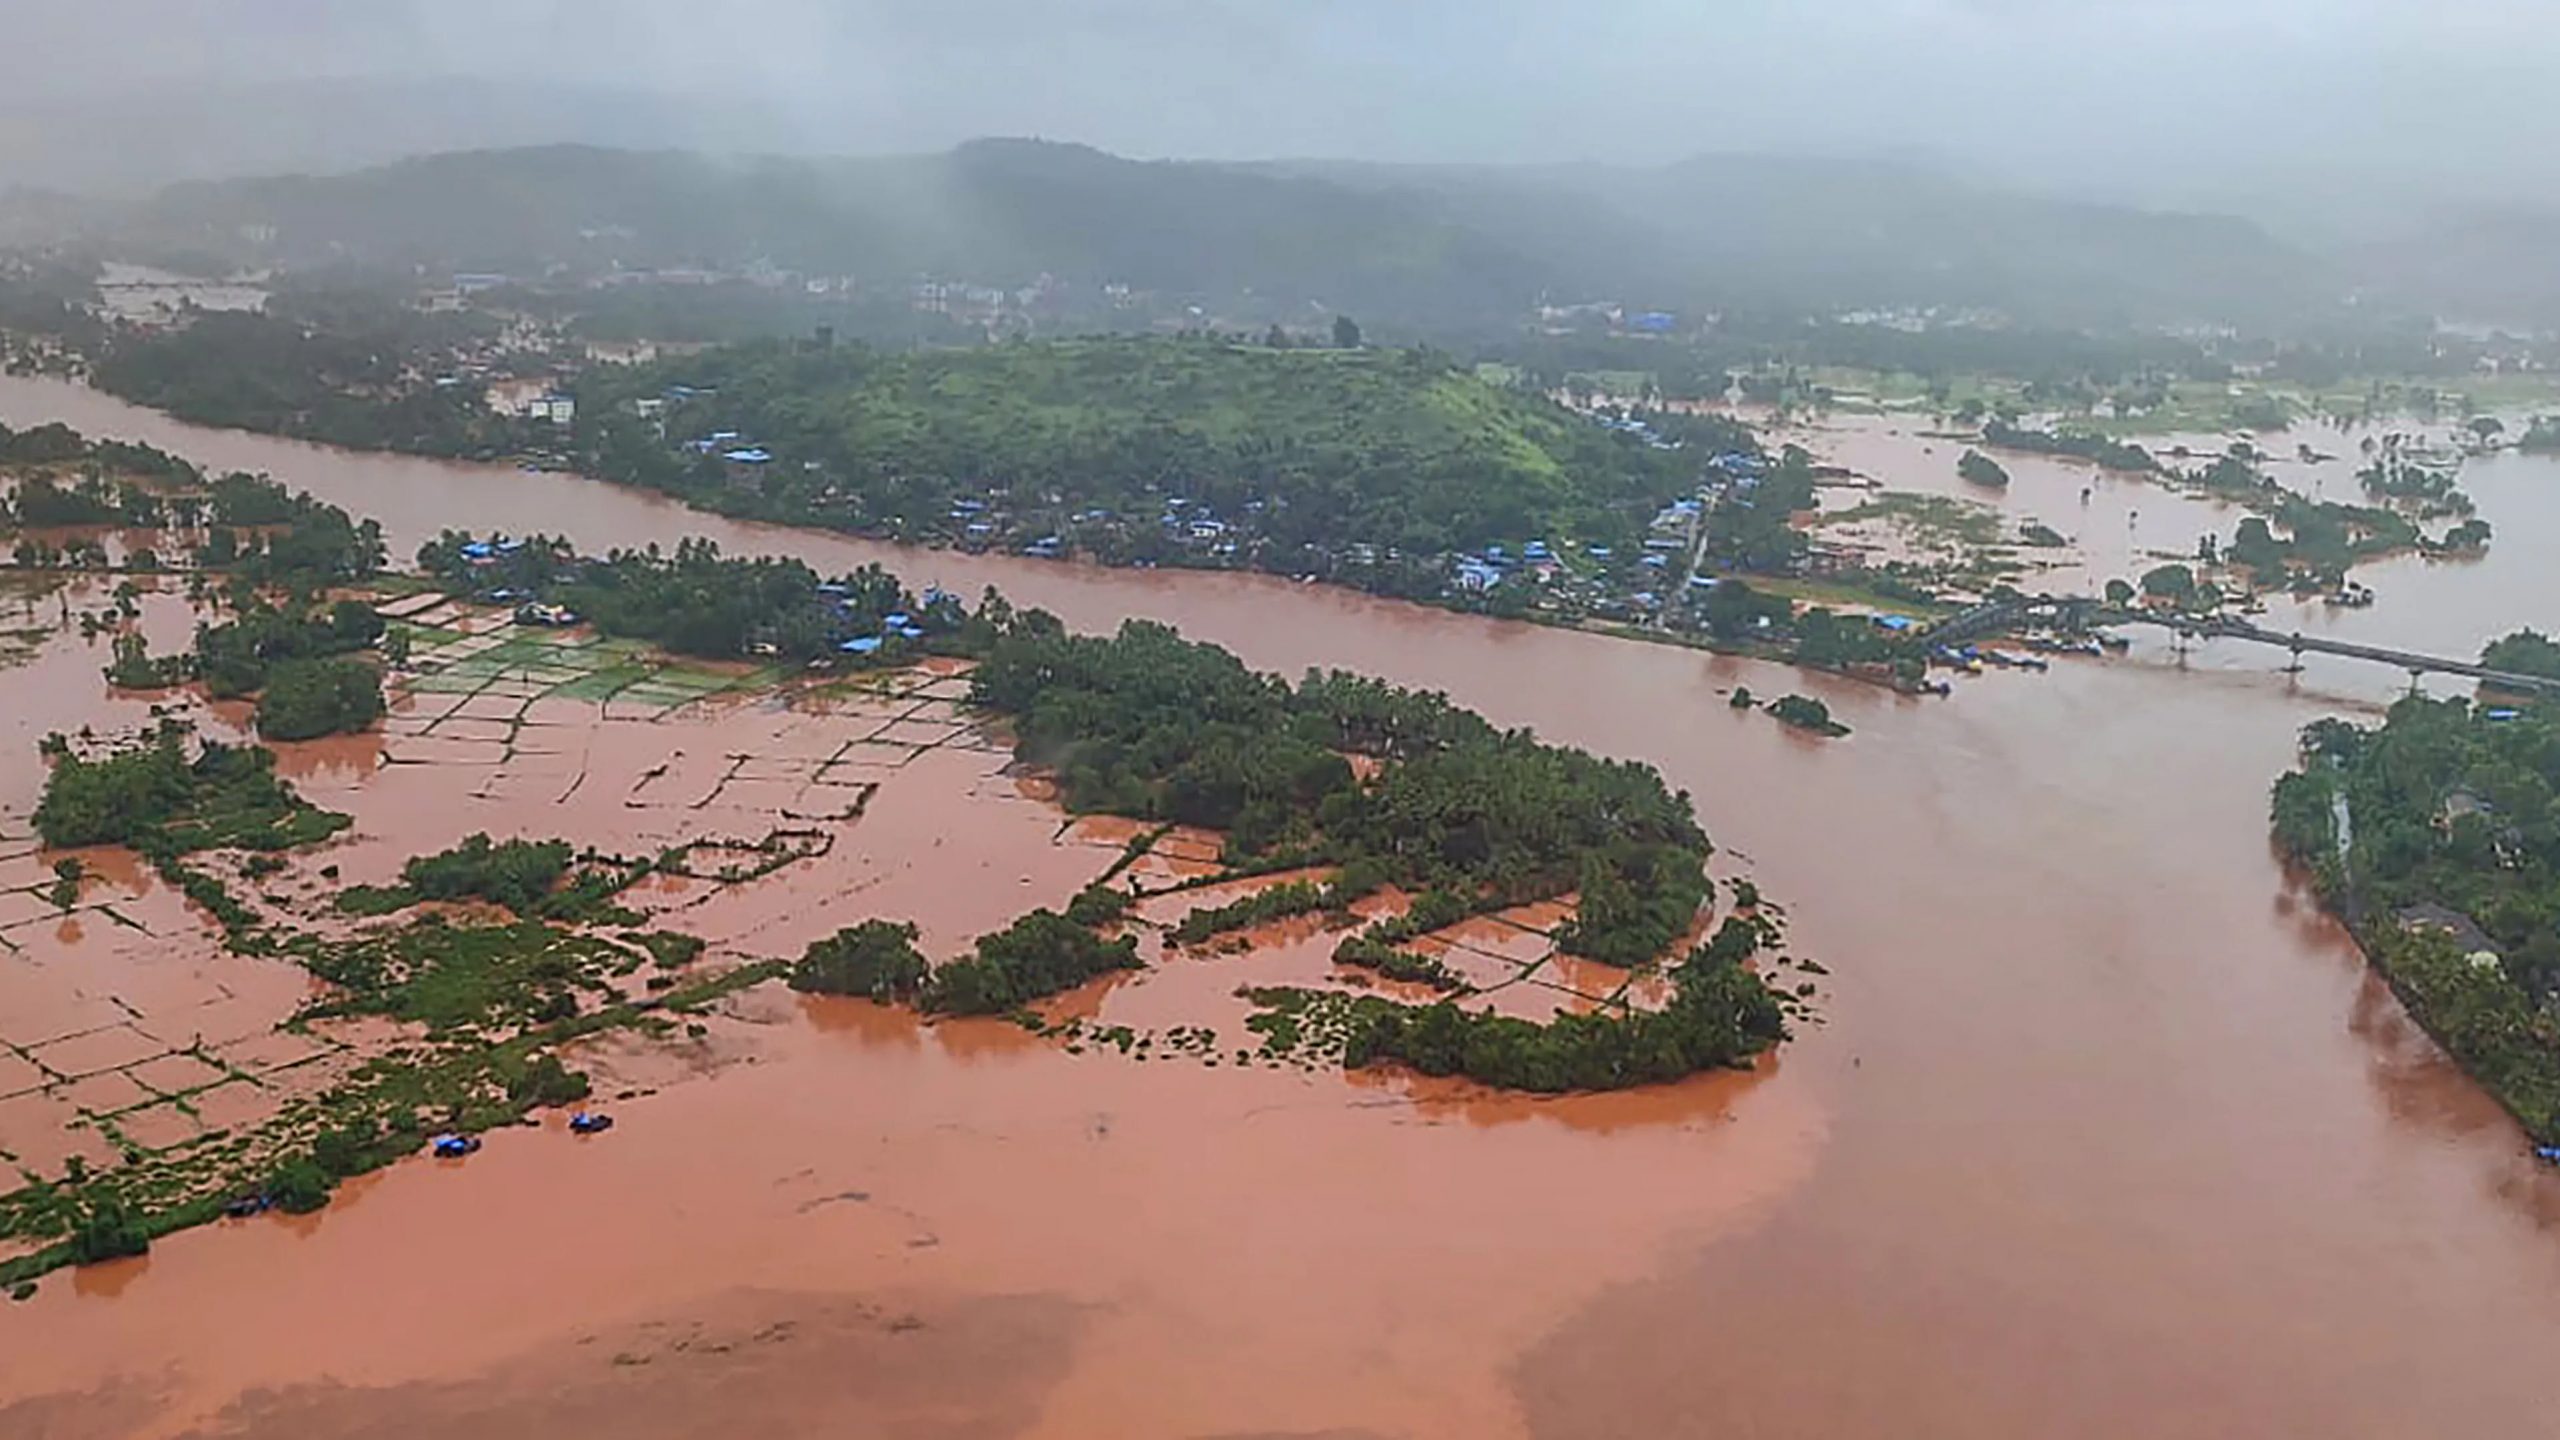 129 dead, thousands displaced: Latest on Maharashtra floods